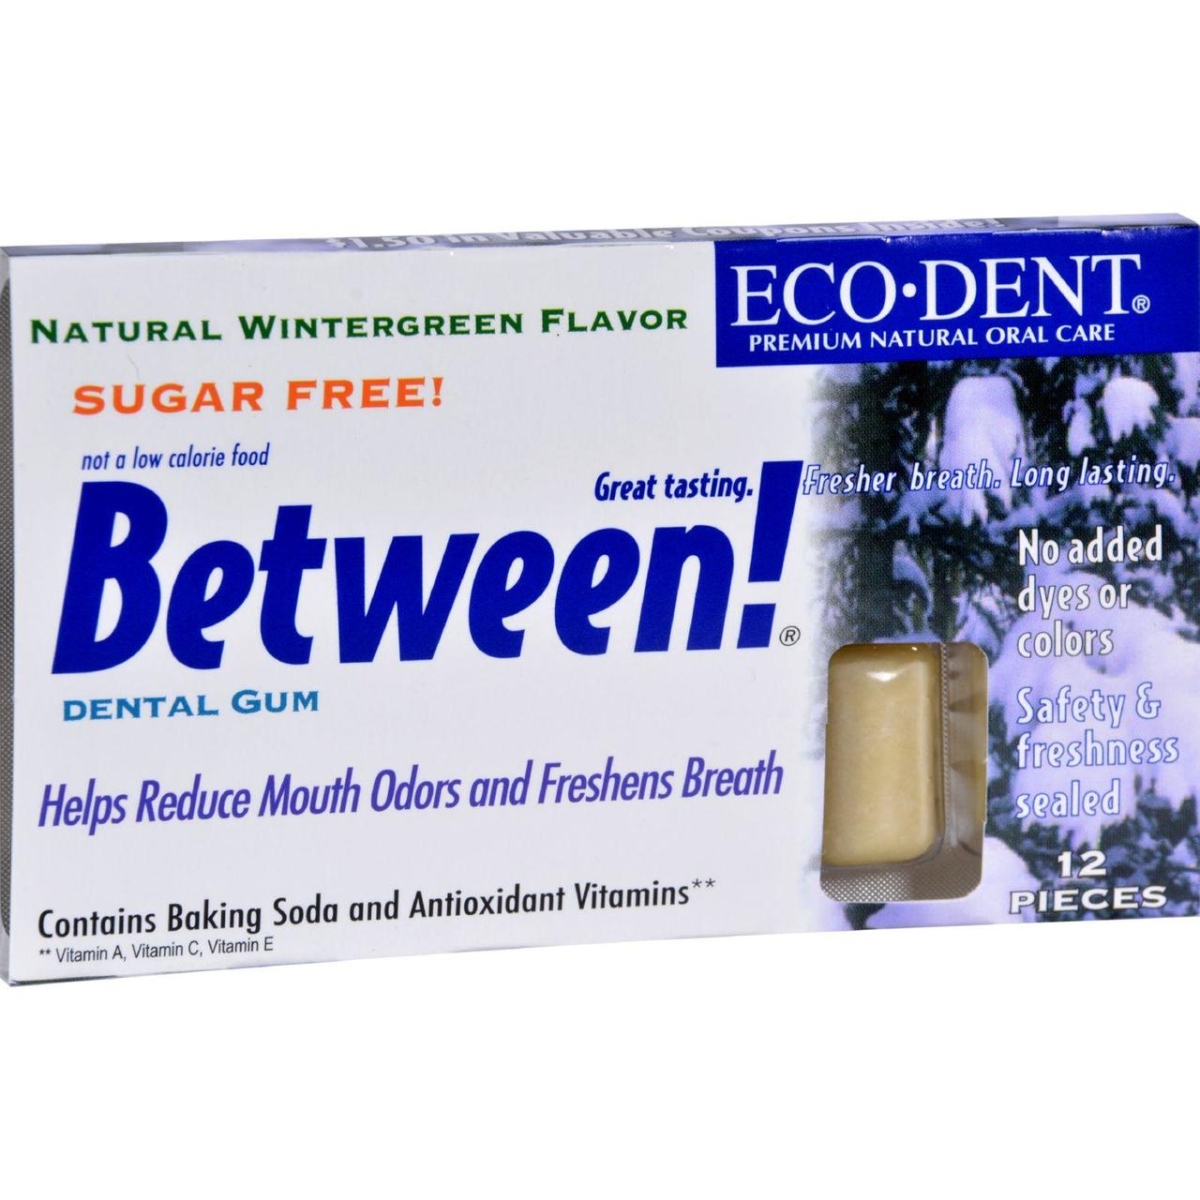 Hg0898098 Between Dental Gum, Wintergreen - Case Of 12, Pack Of 12